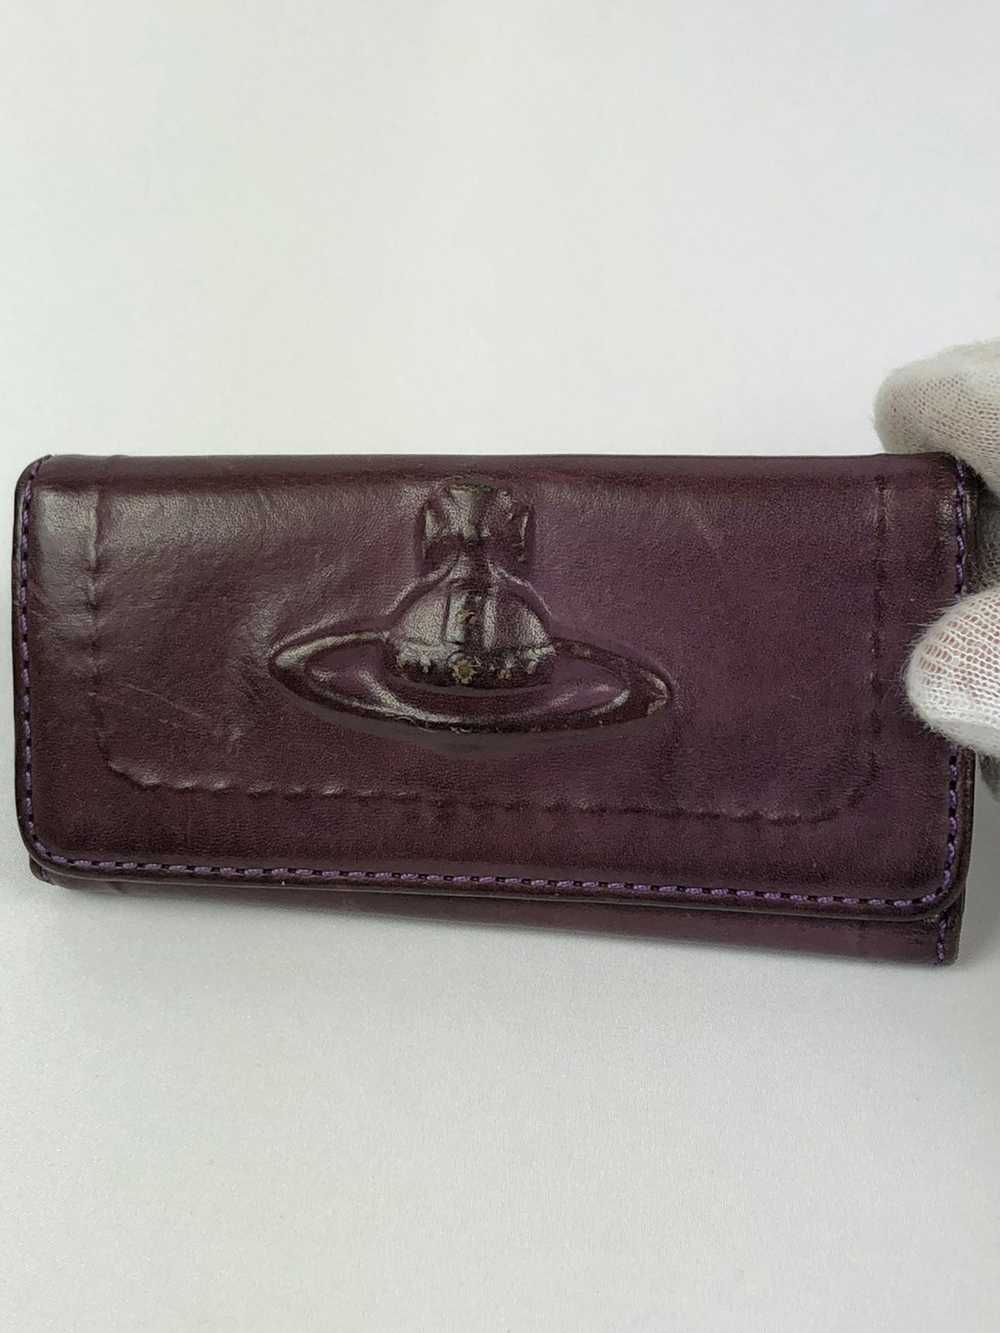 Vivienne Westwood Orb leather key holder - image 1